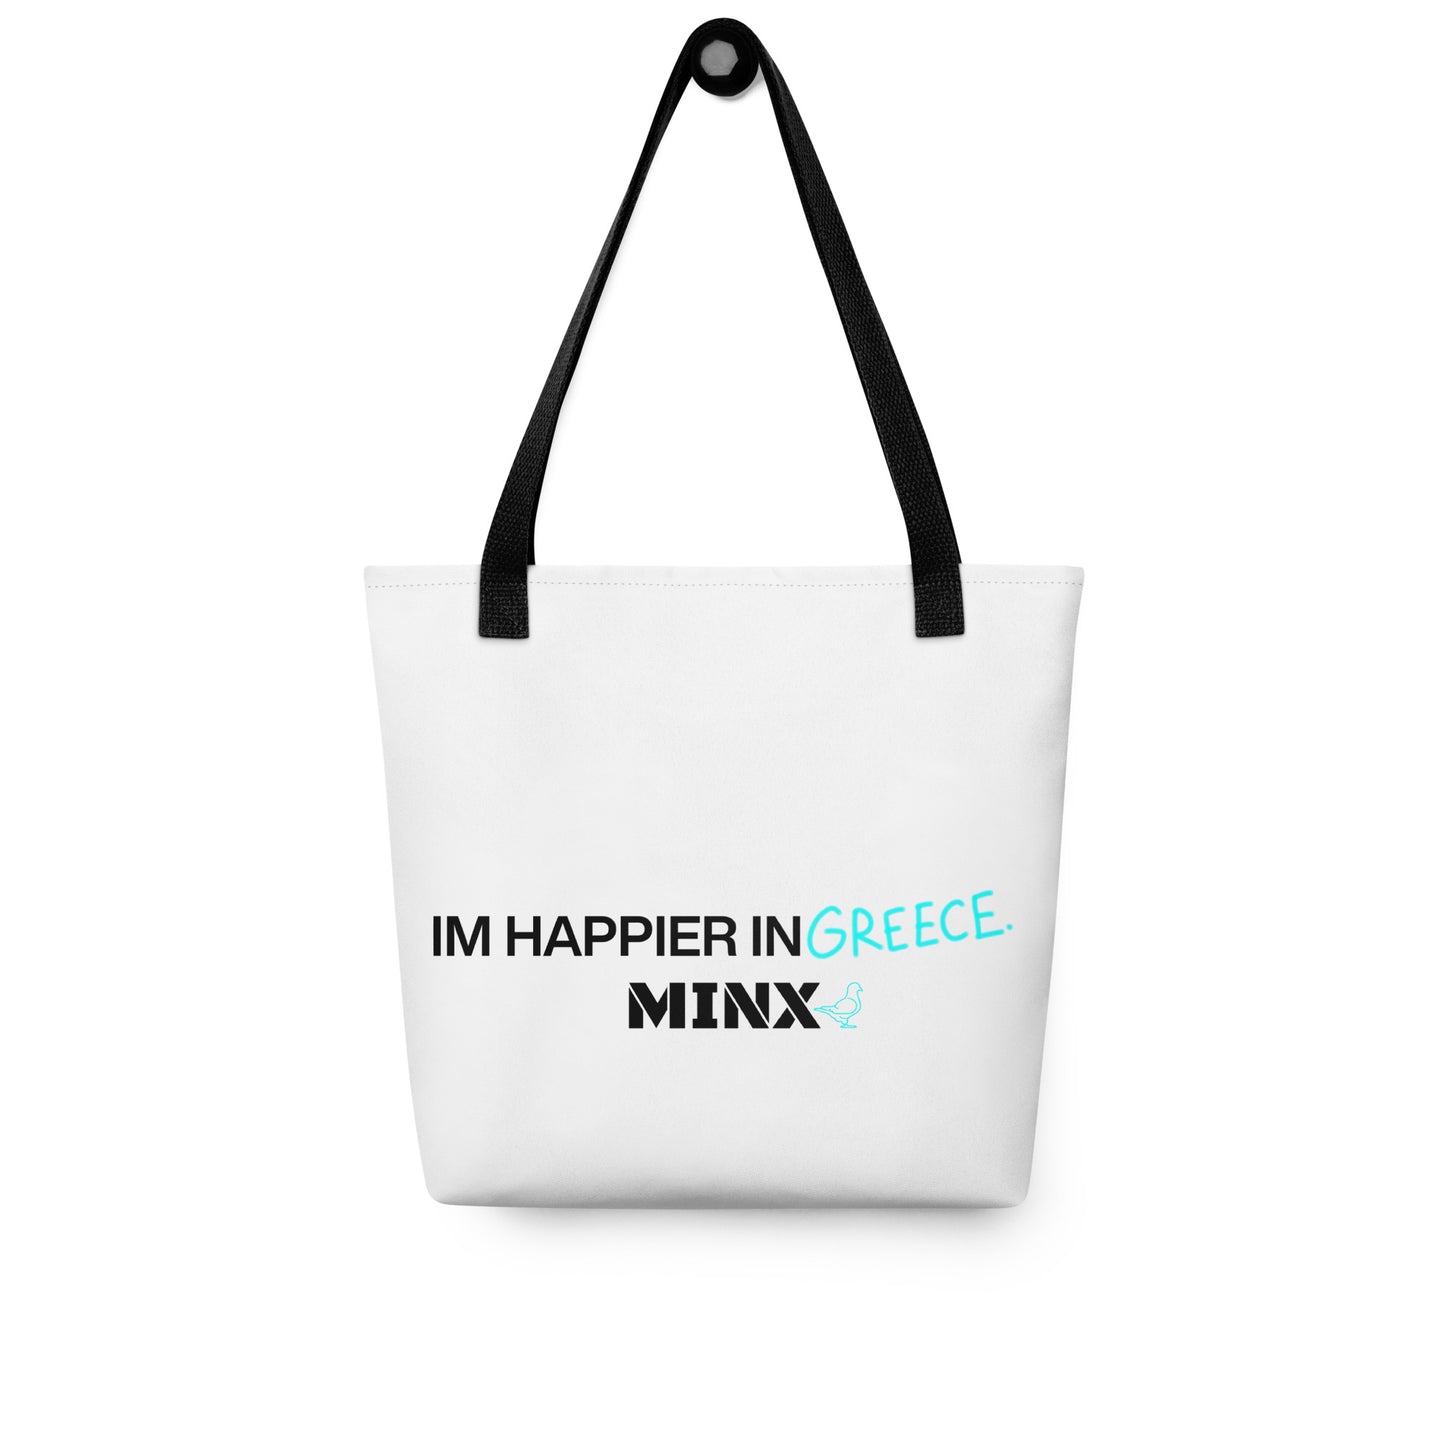 IM HAPPIER IN GREECE TOTE BAG